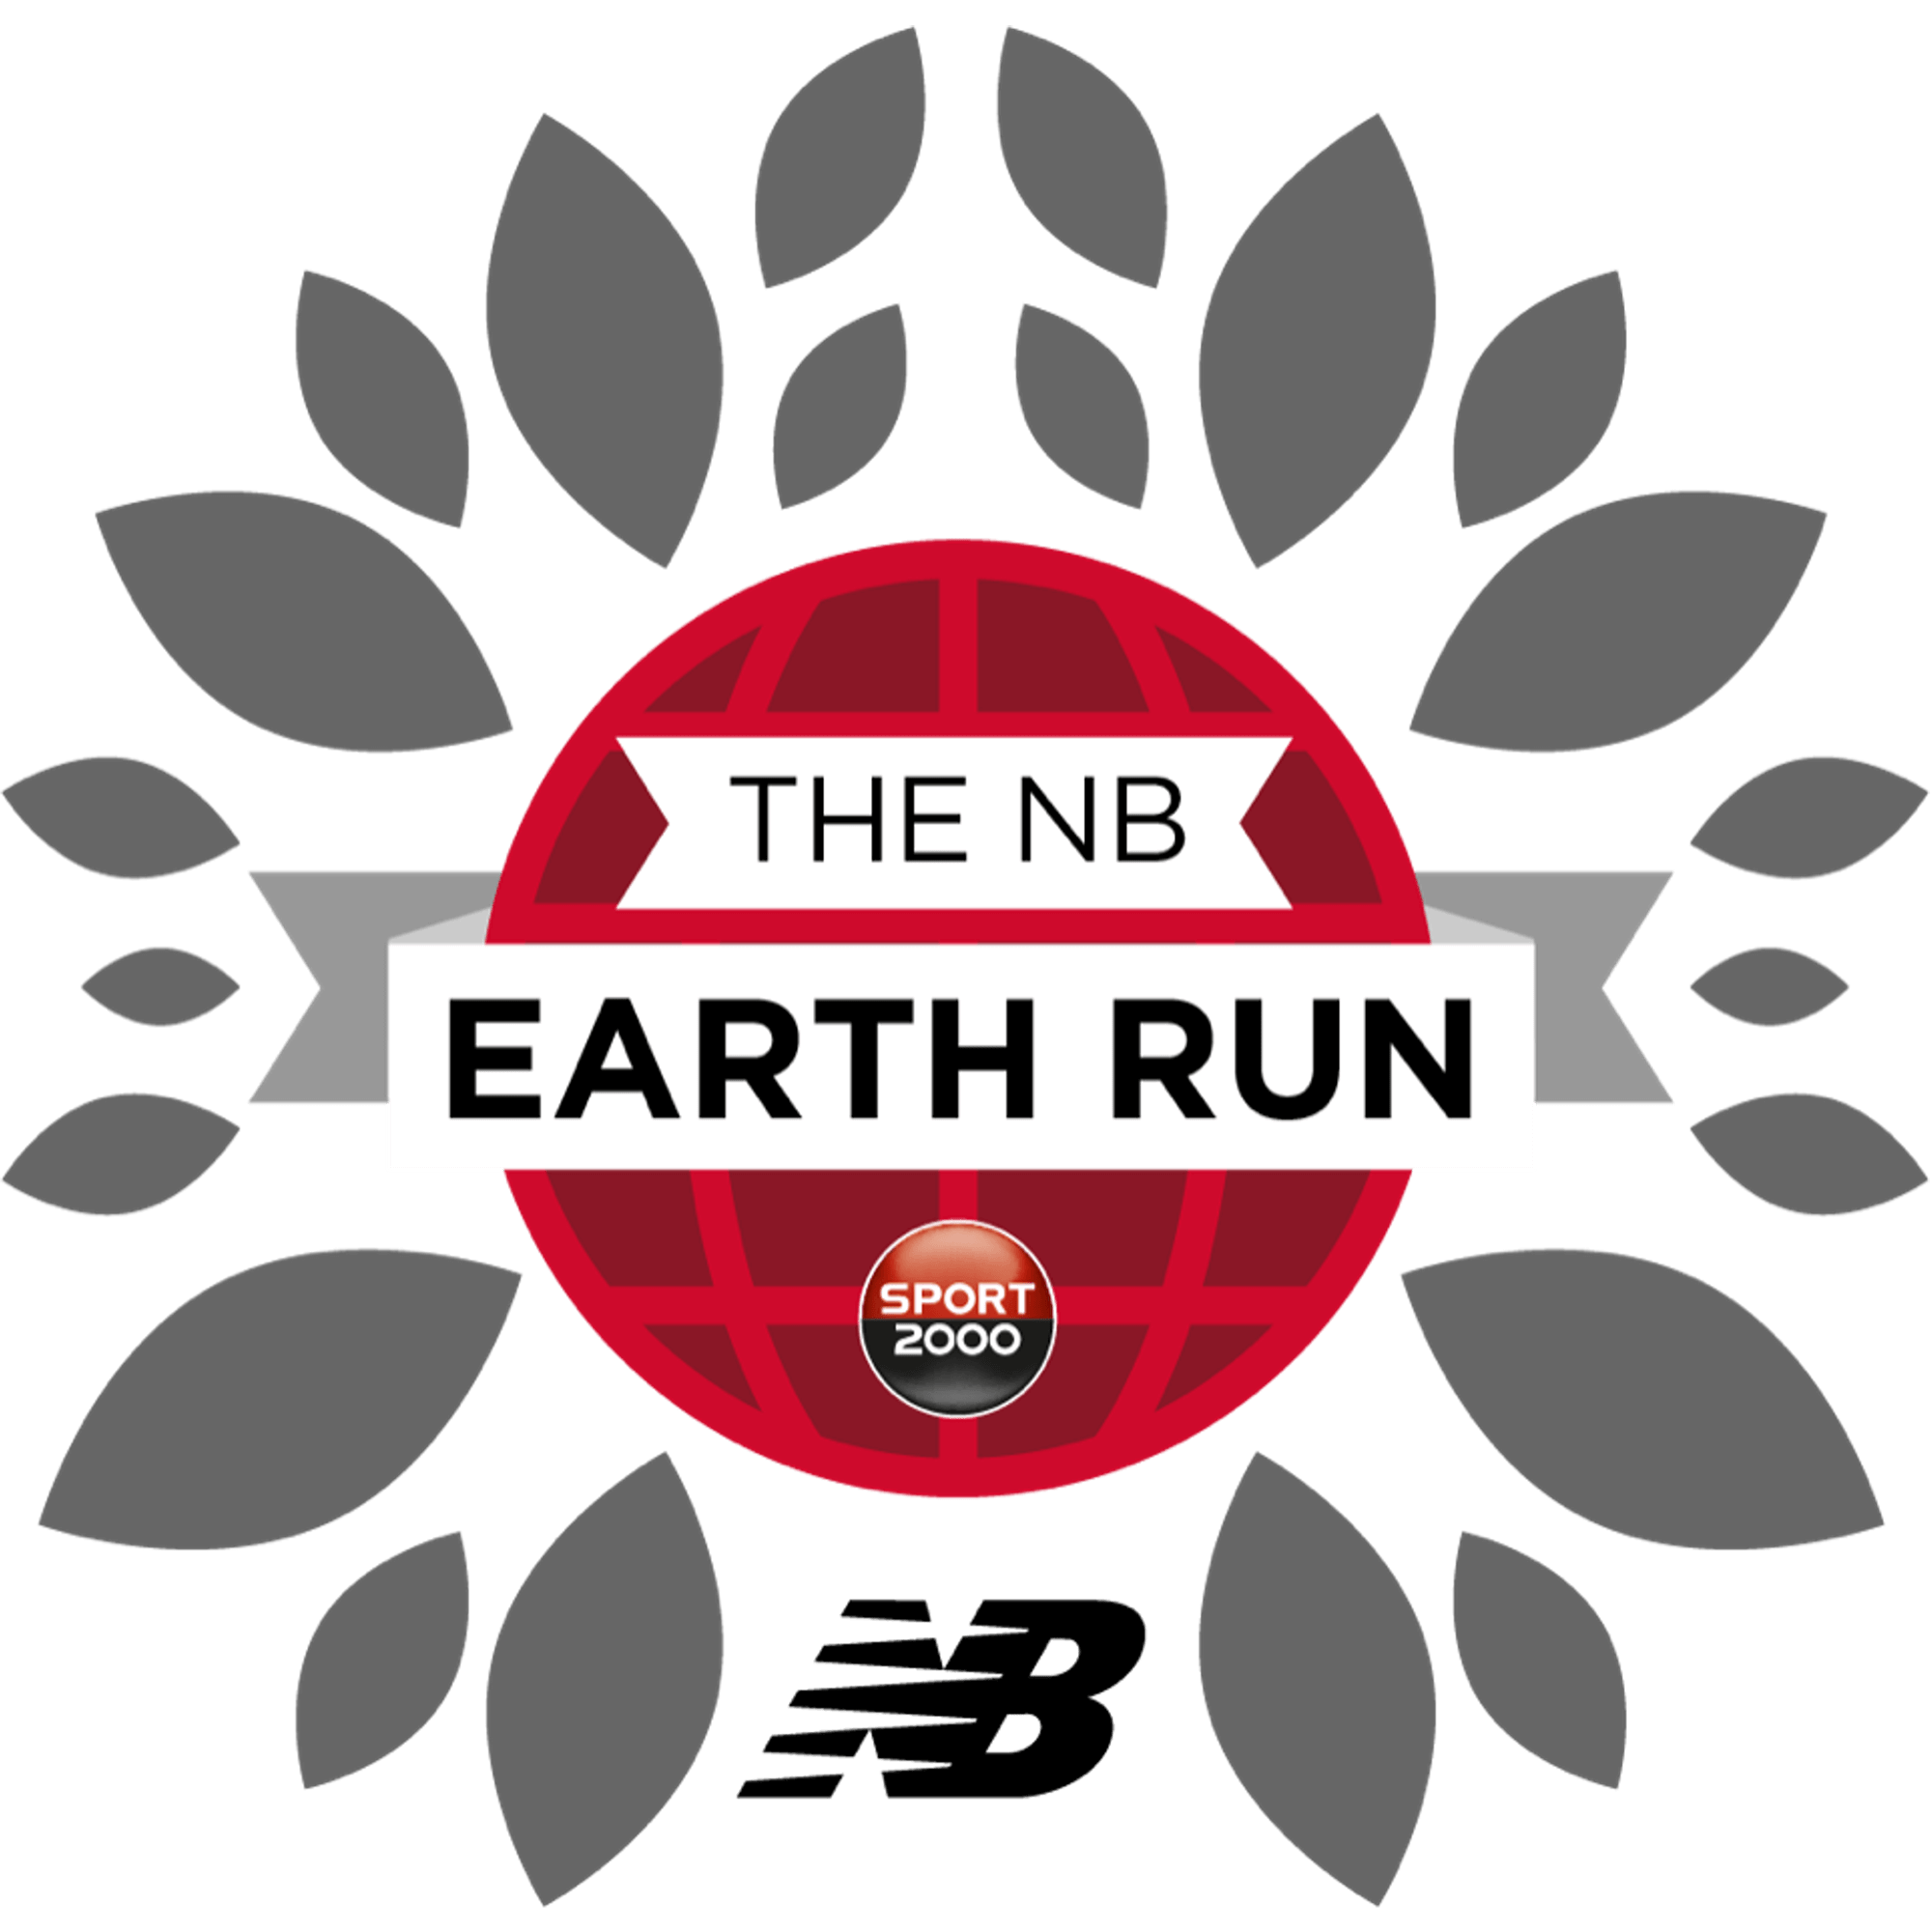 "The NB Earth Run" by New Balance